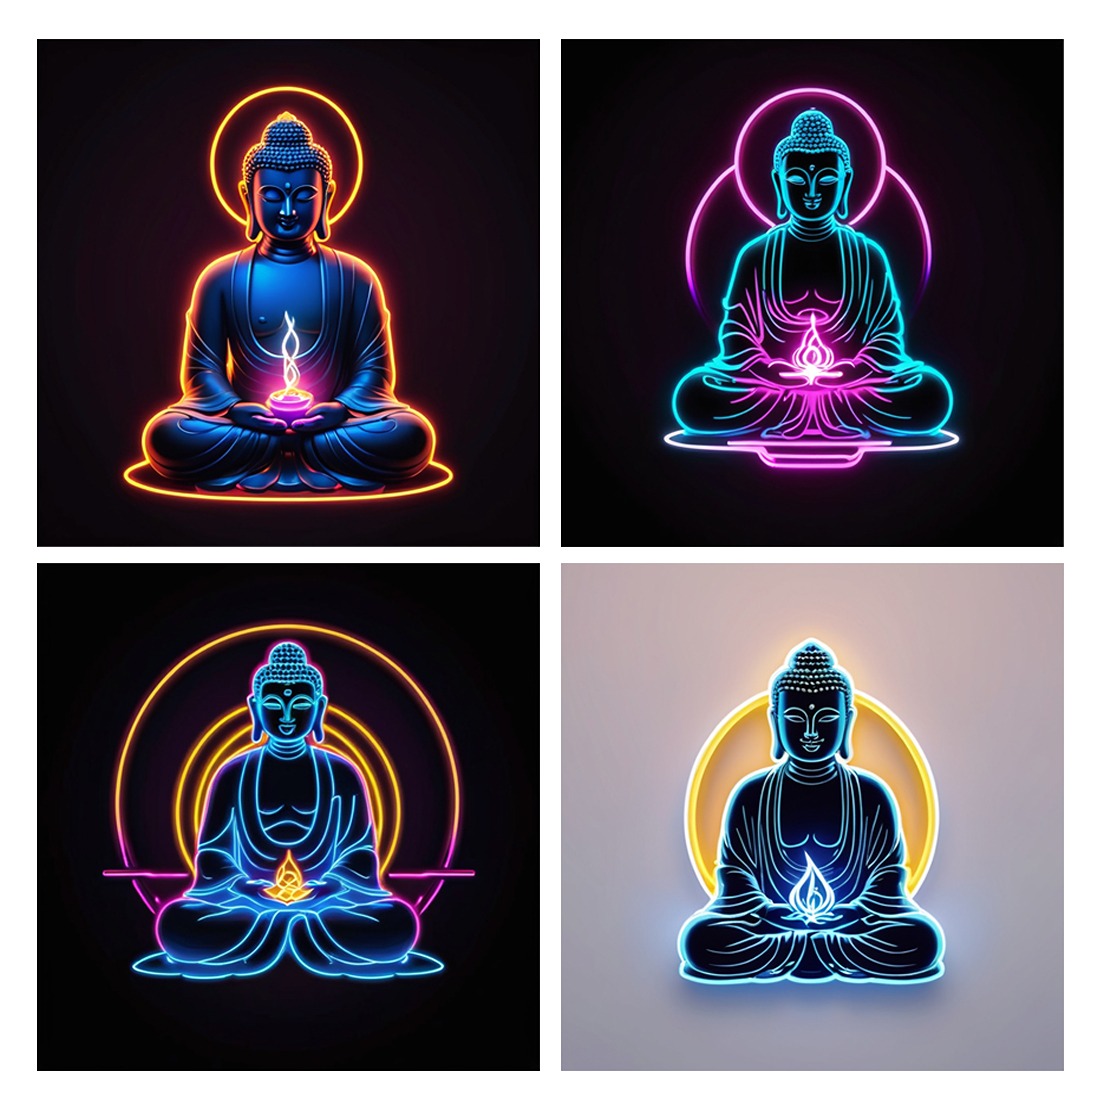 Buddha - Neon Light 3D Effects Logo Design Template cover image.